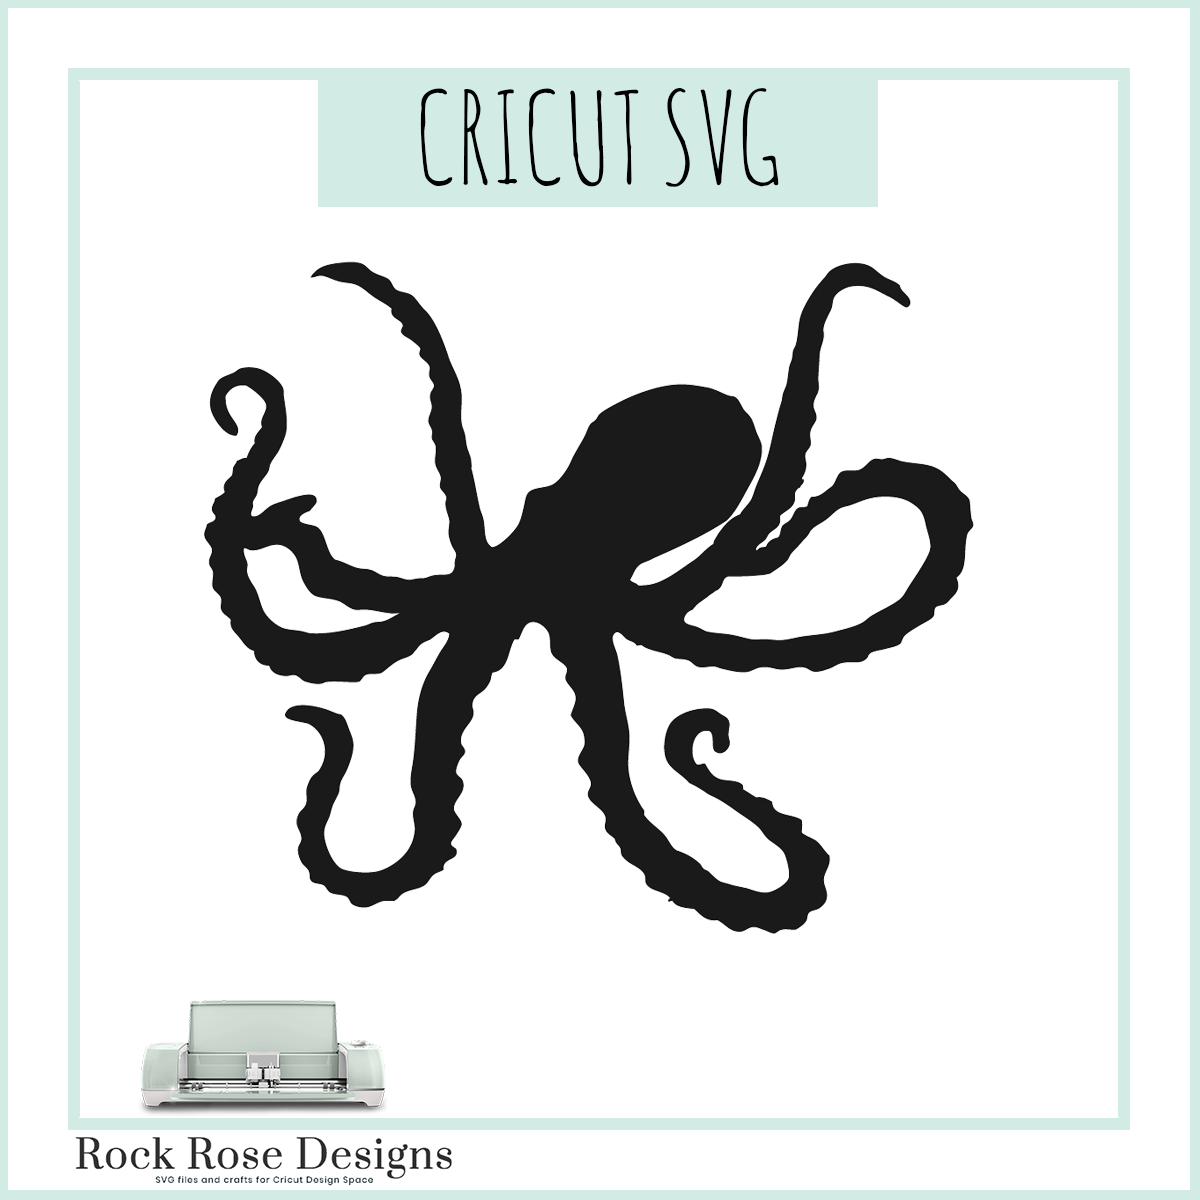 Download Octopus Svg Cut File Rock Rose Designs Rock Rose Designs